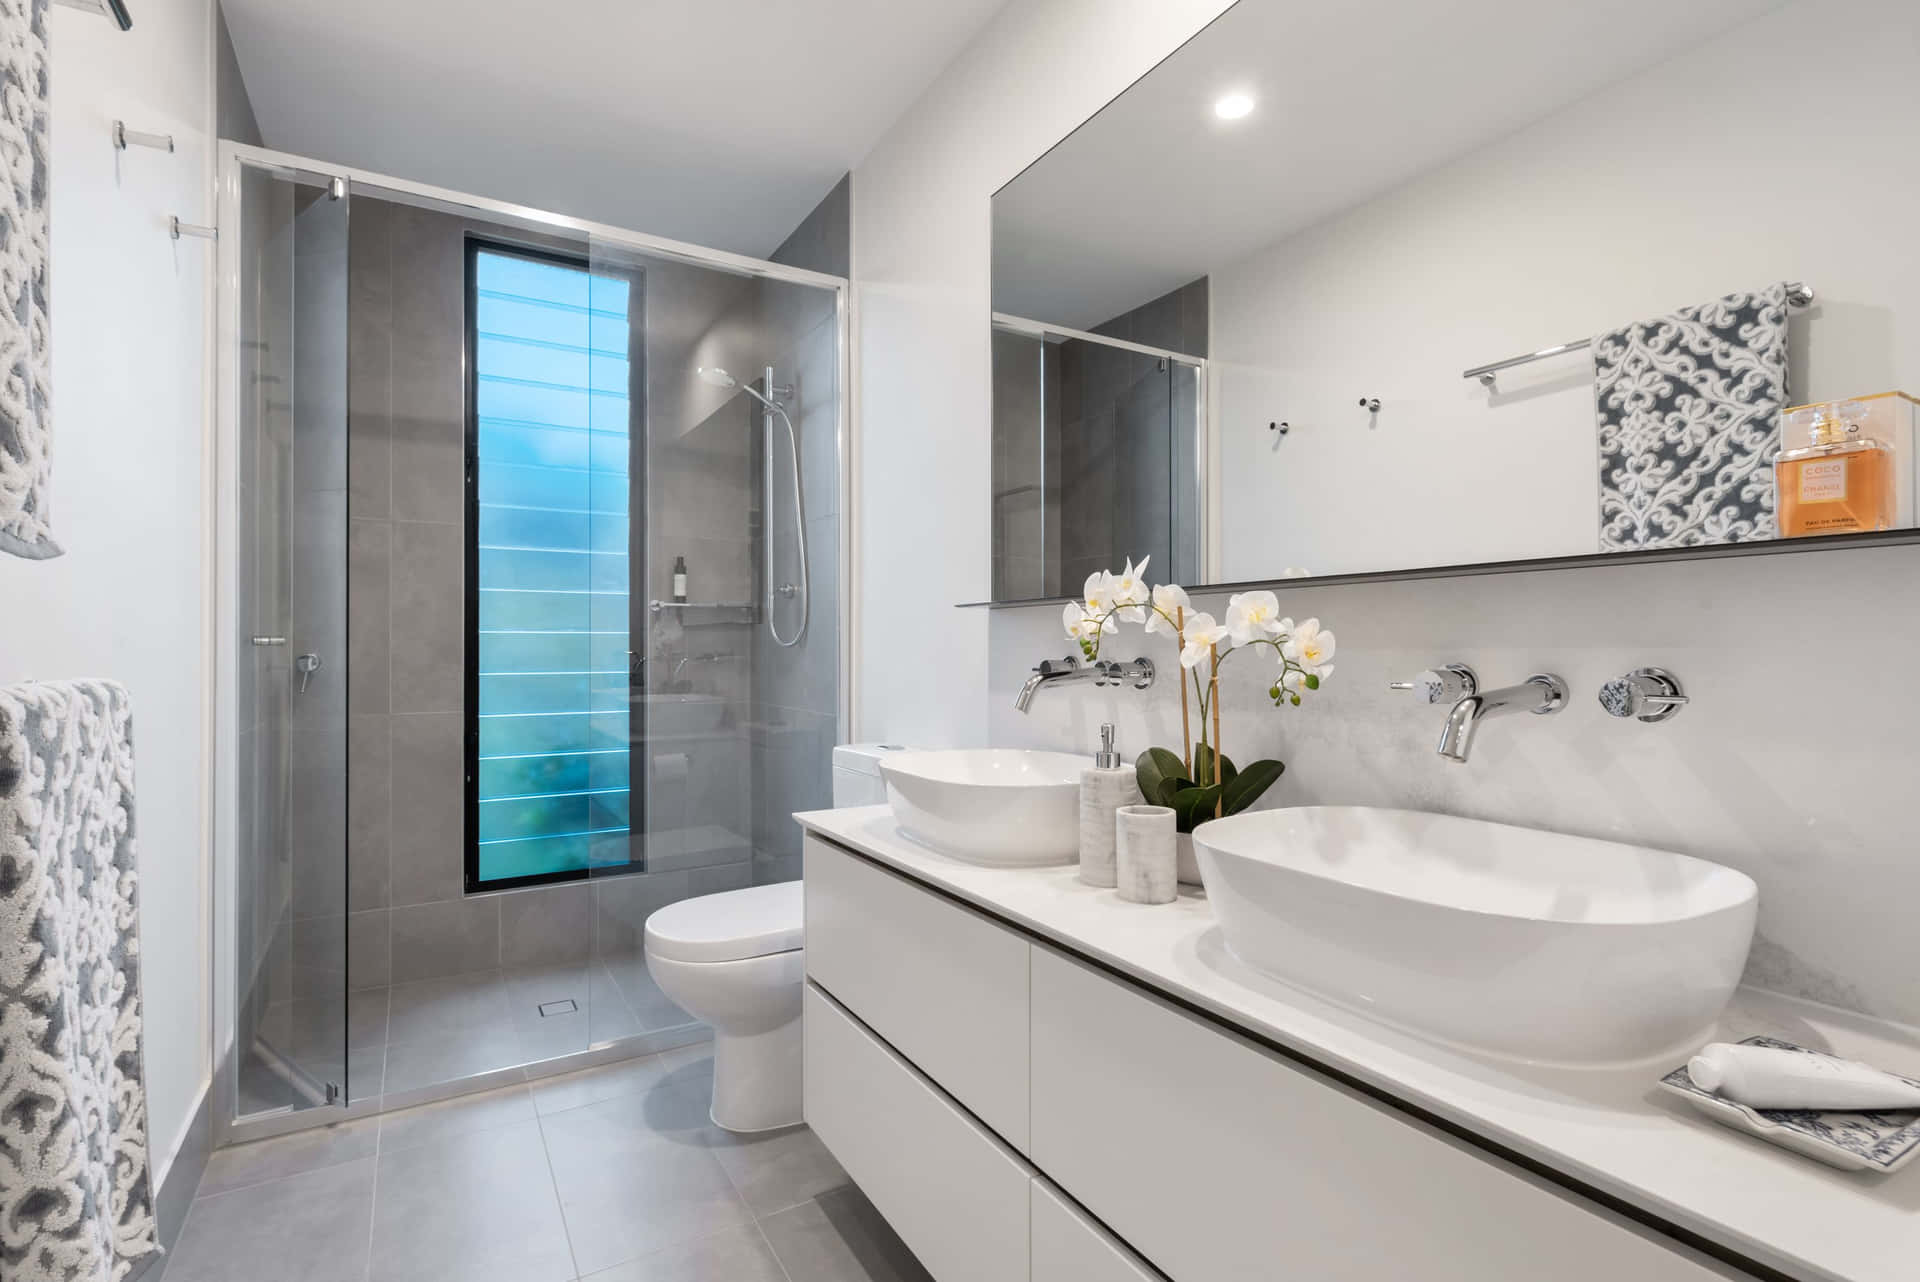 White Vanity For Bathroom Design Picture